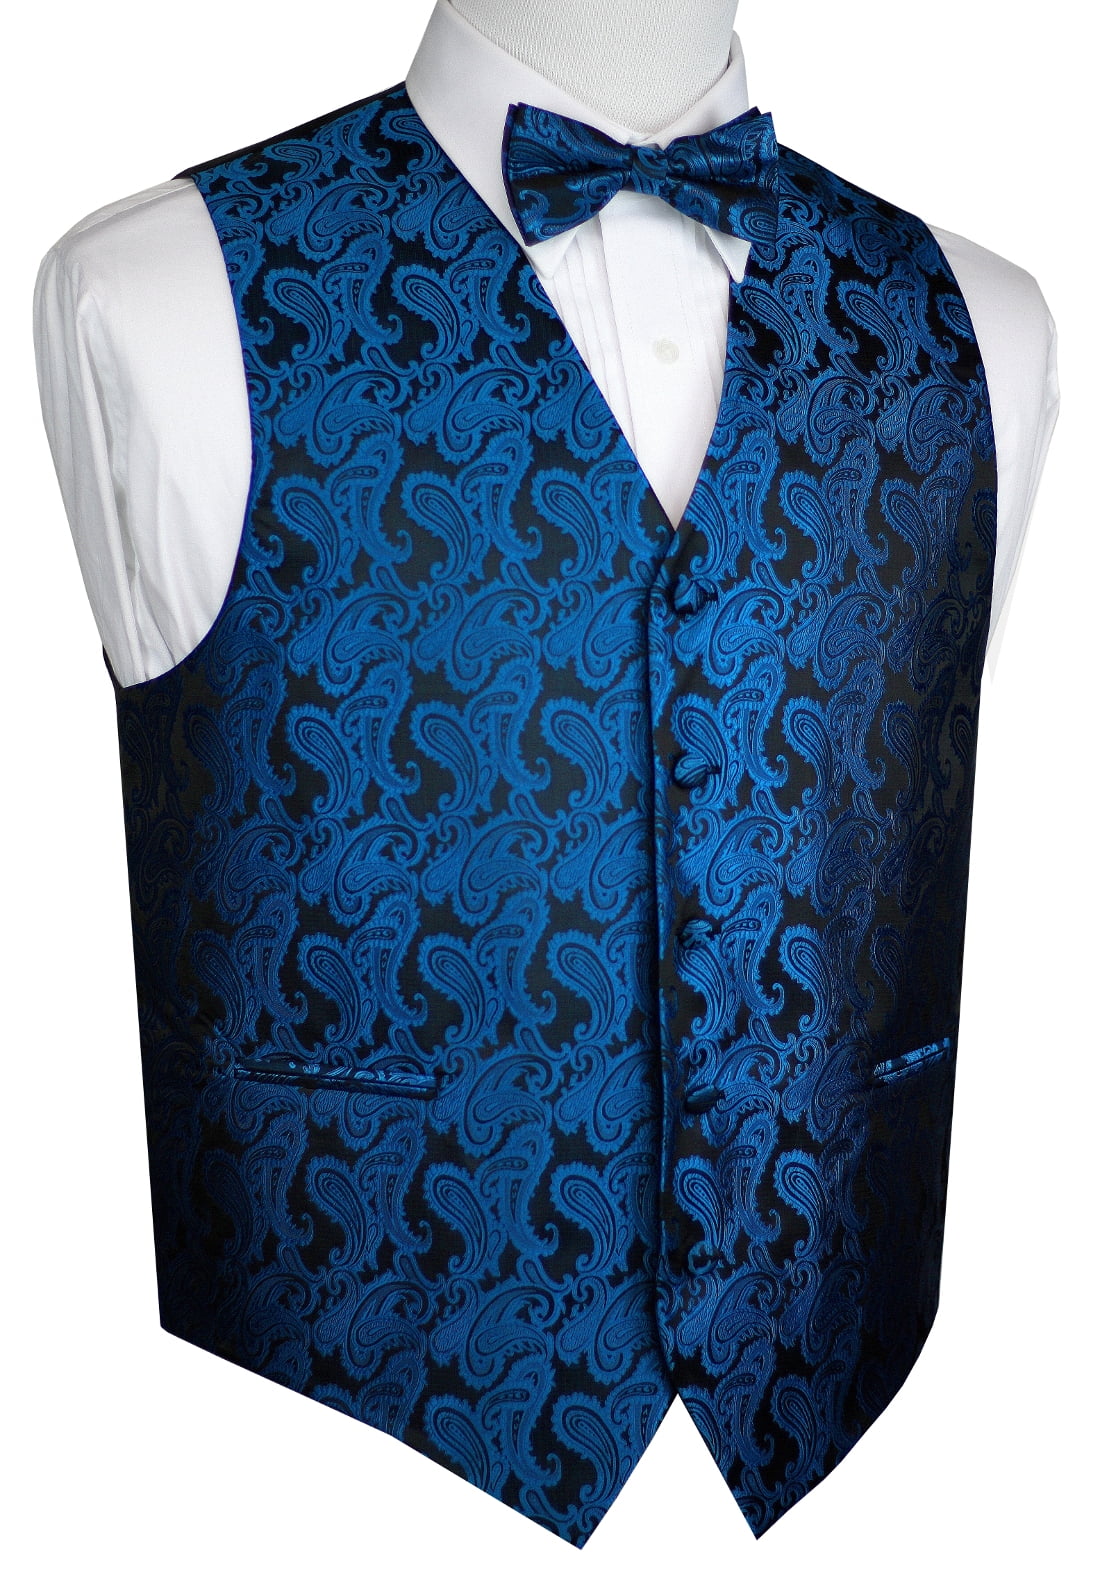 New Men's Light blue formal vest Tuxedo Waistcoat_2.5" necktie & hankie wedding 